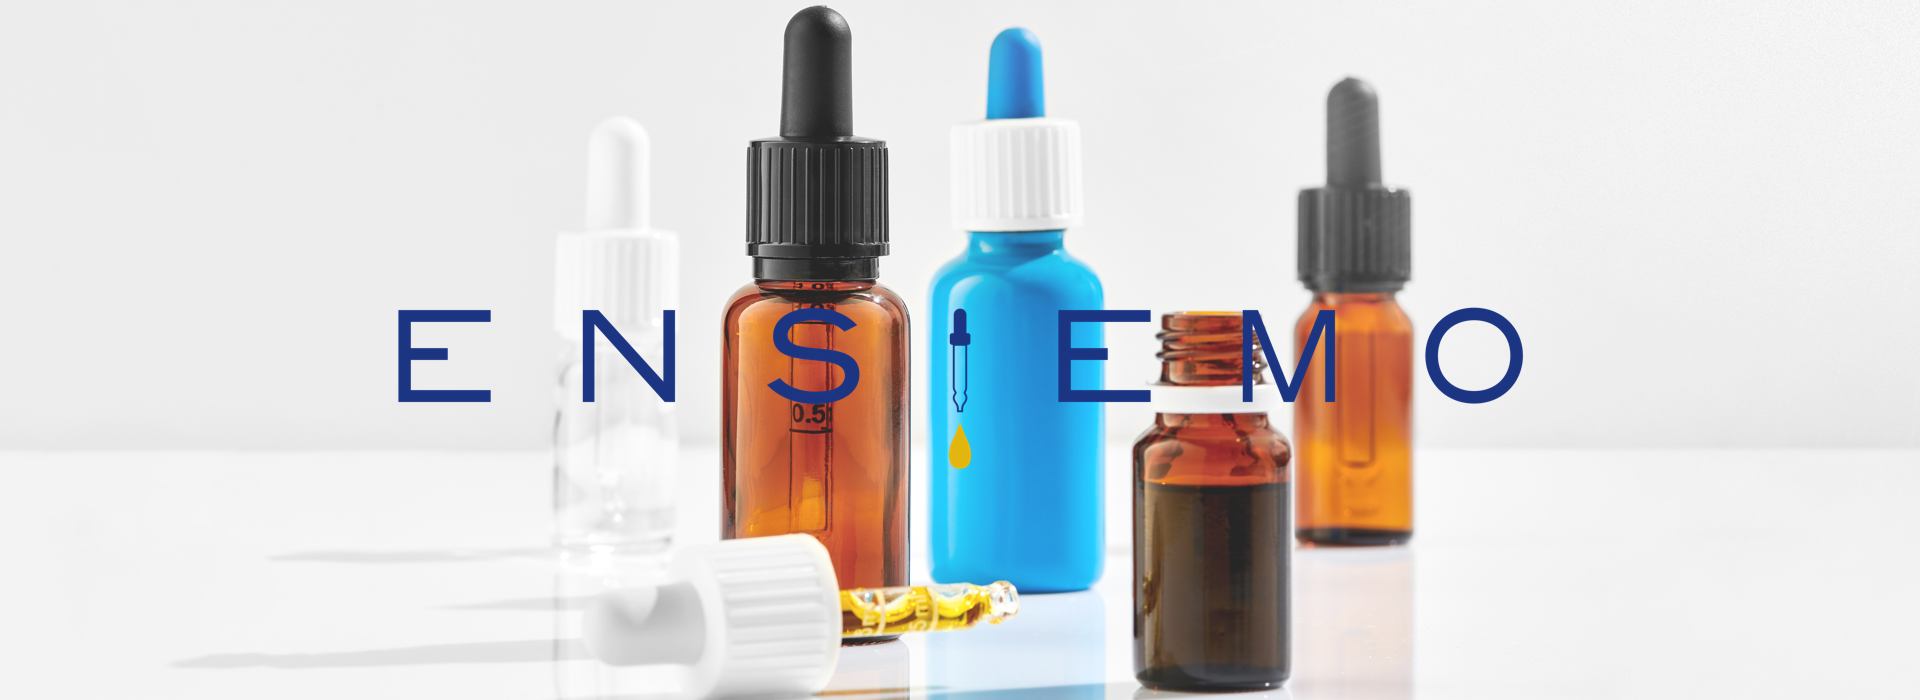 SGD Pharma - Ensiemo - Dropper, oral bottles, oil dropper, plastic coating, CBD oil, CBD, cannabidiol